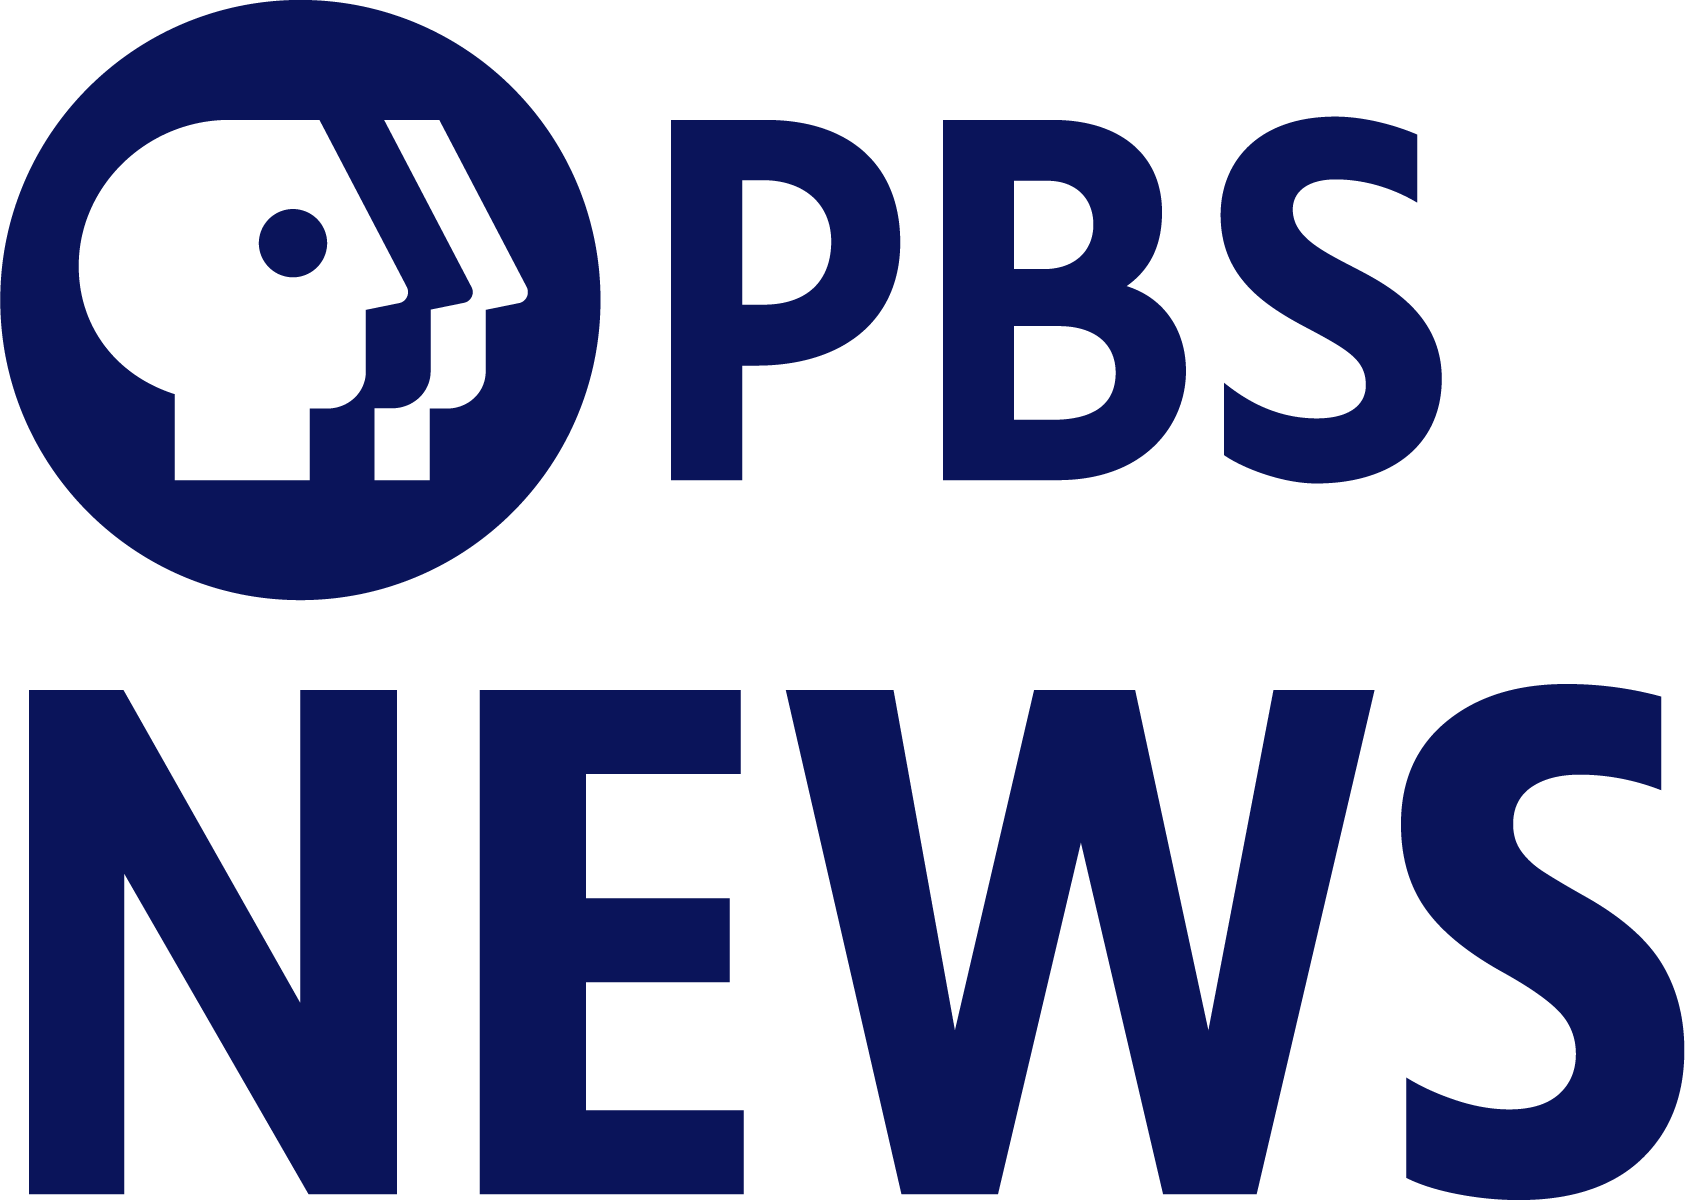 PBS NEWS HOUR